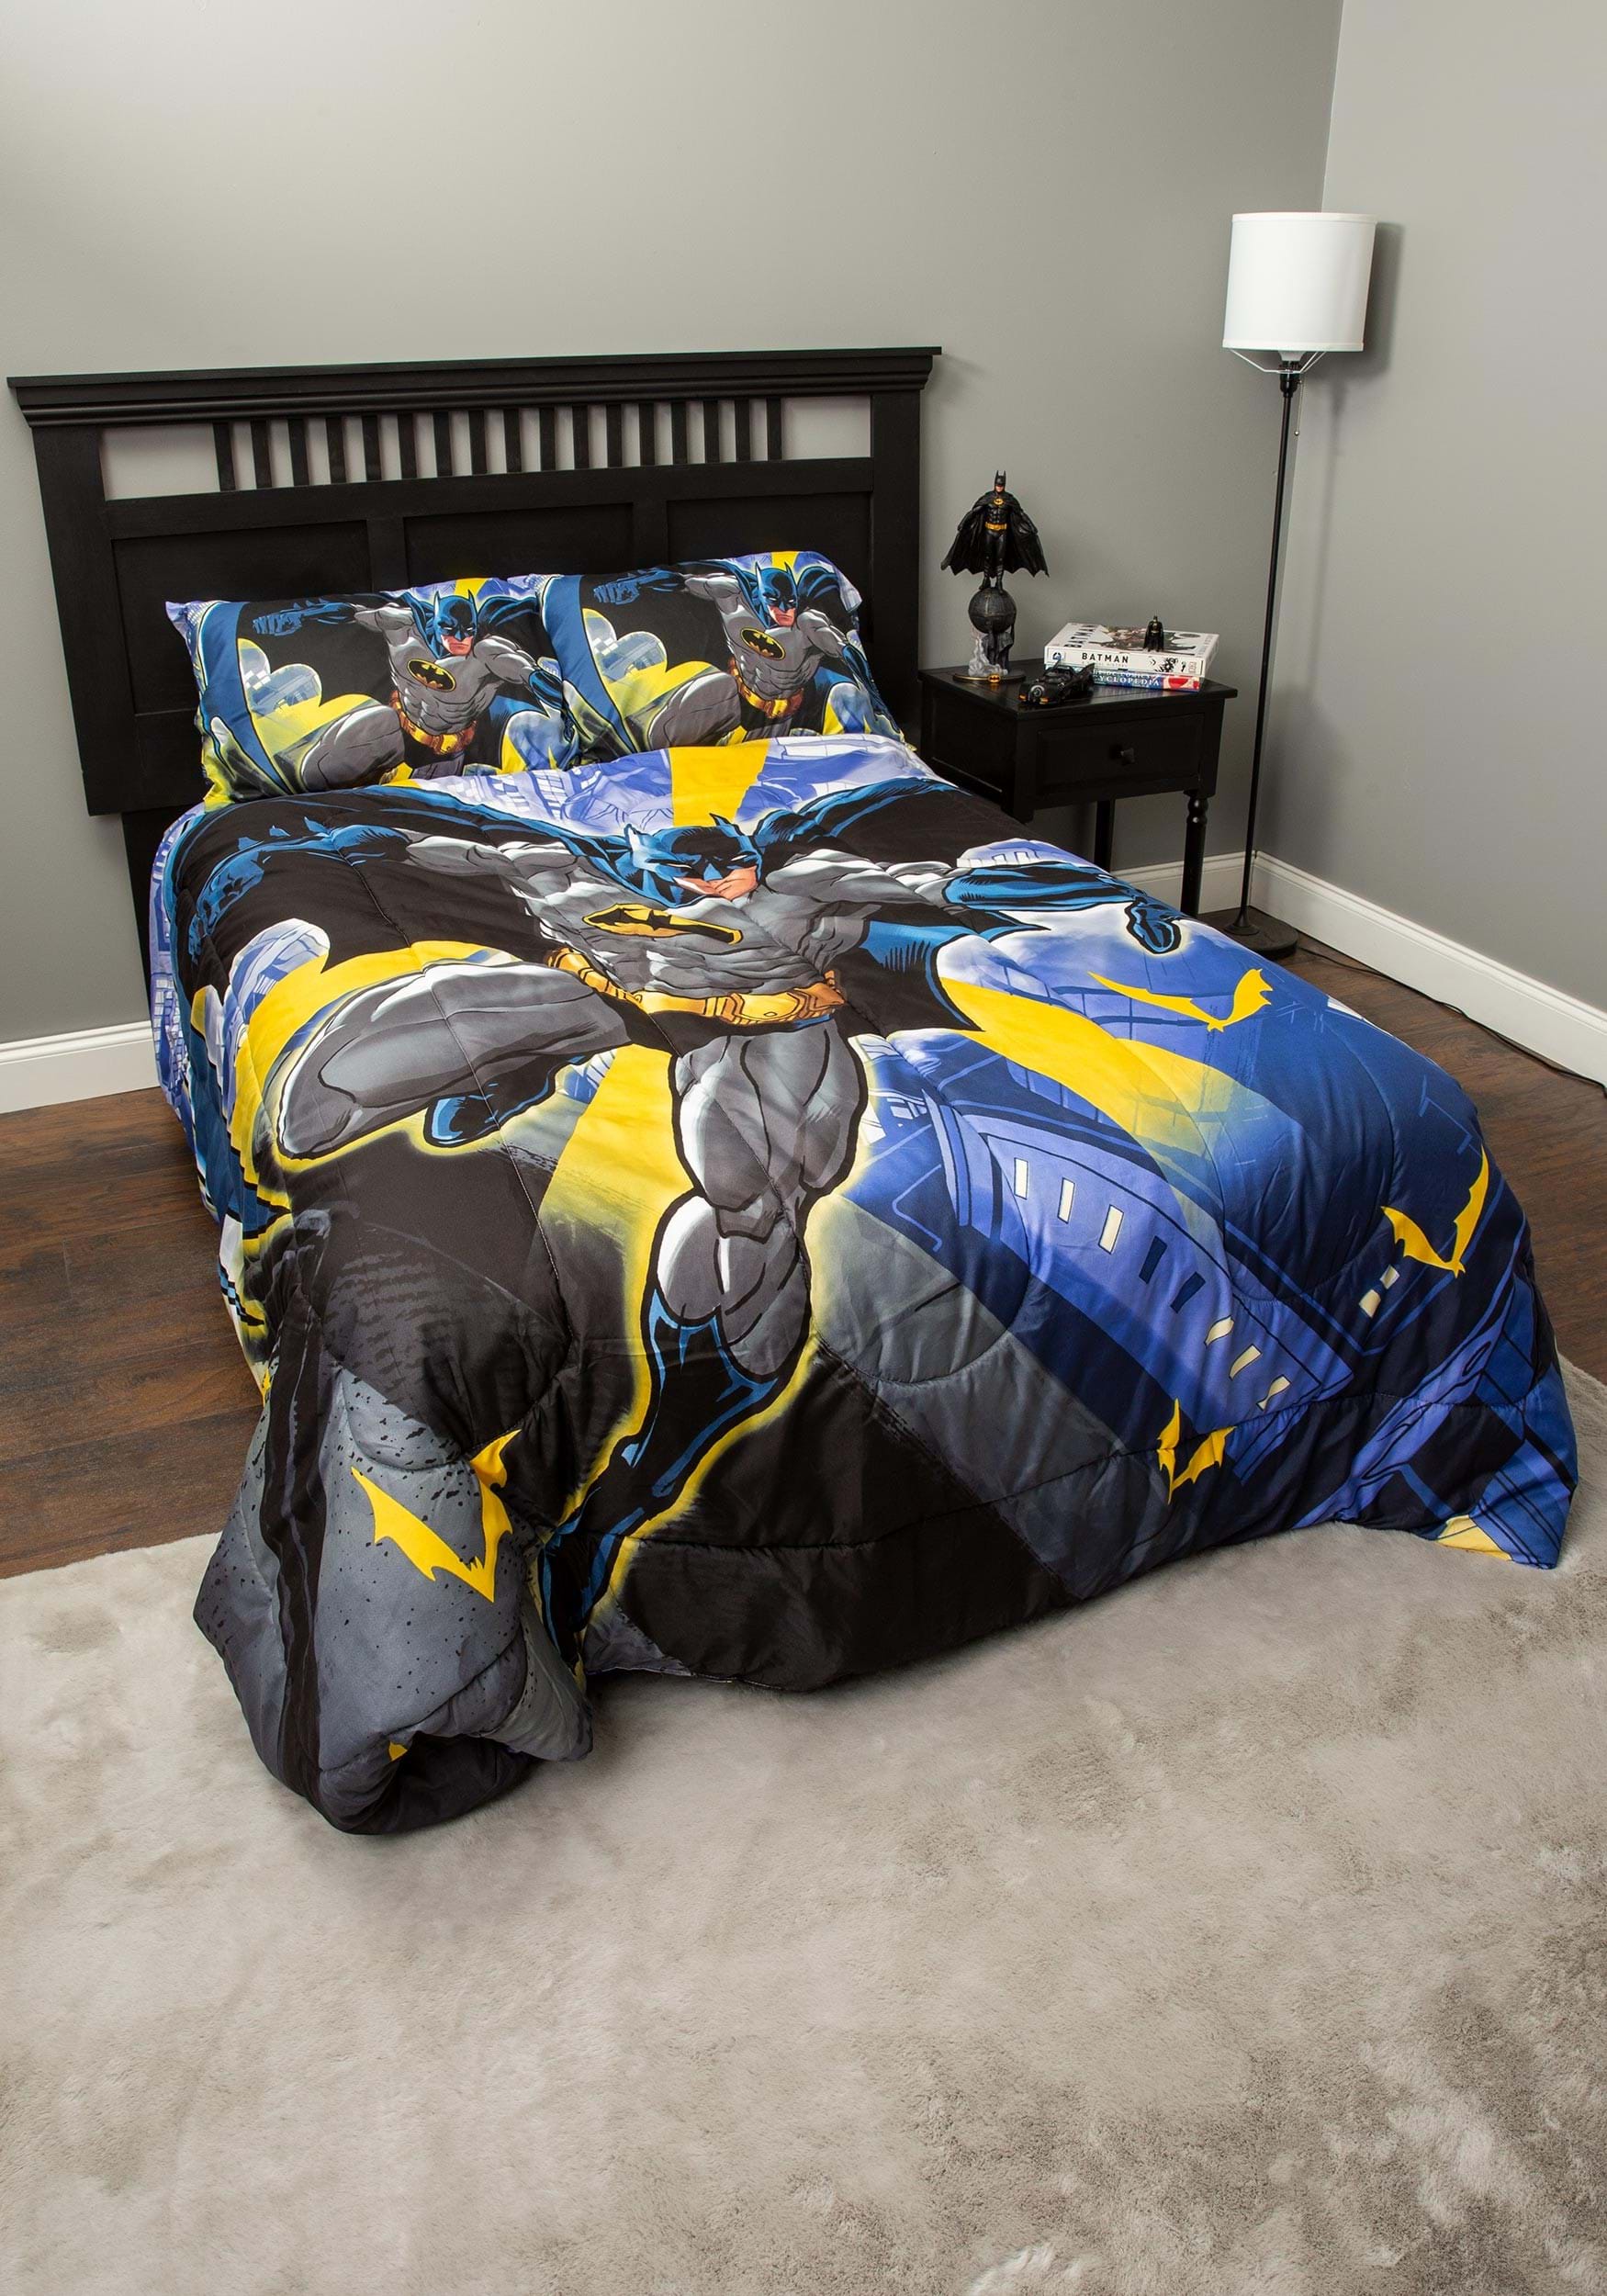 Batman City Comforter Set For Full Size Bed, Batman King Size Bedding